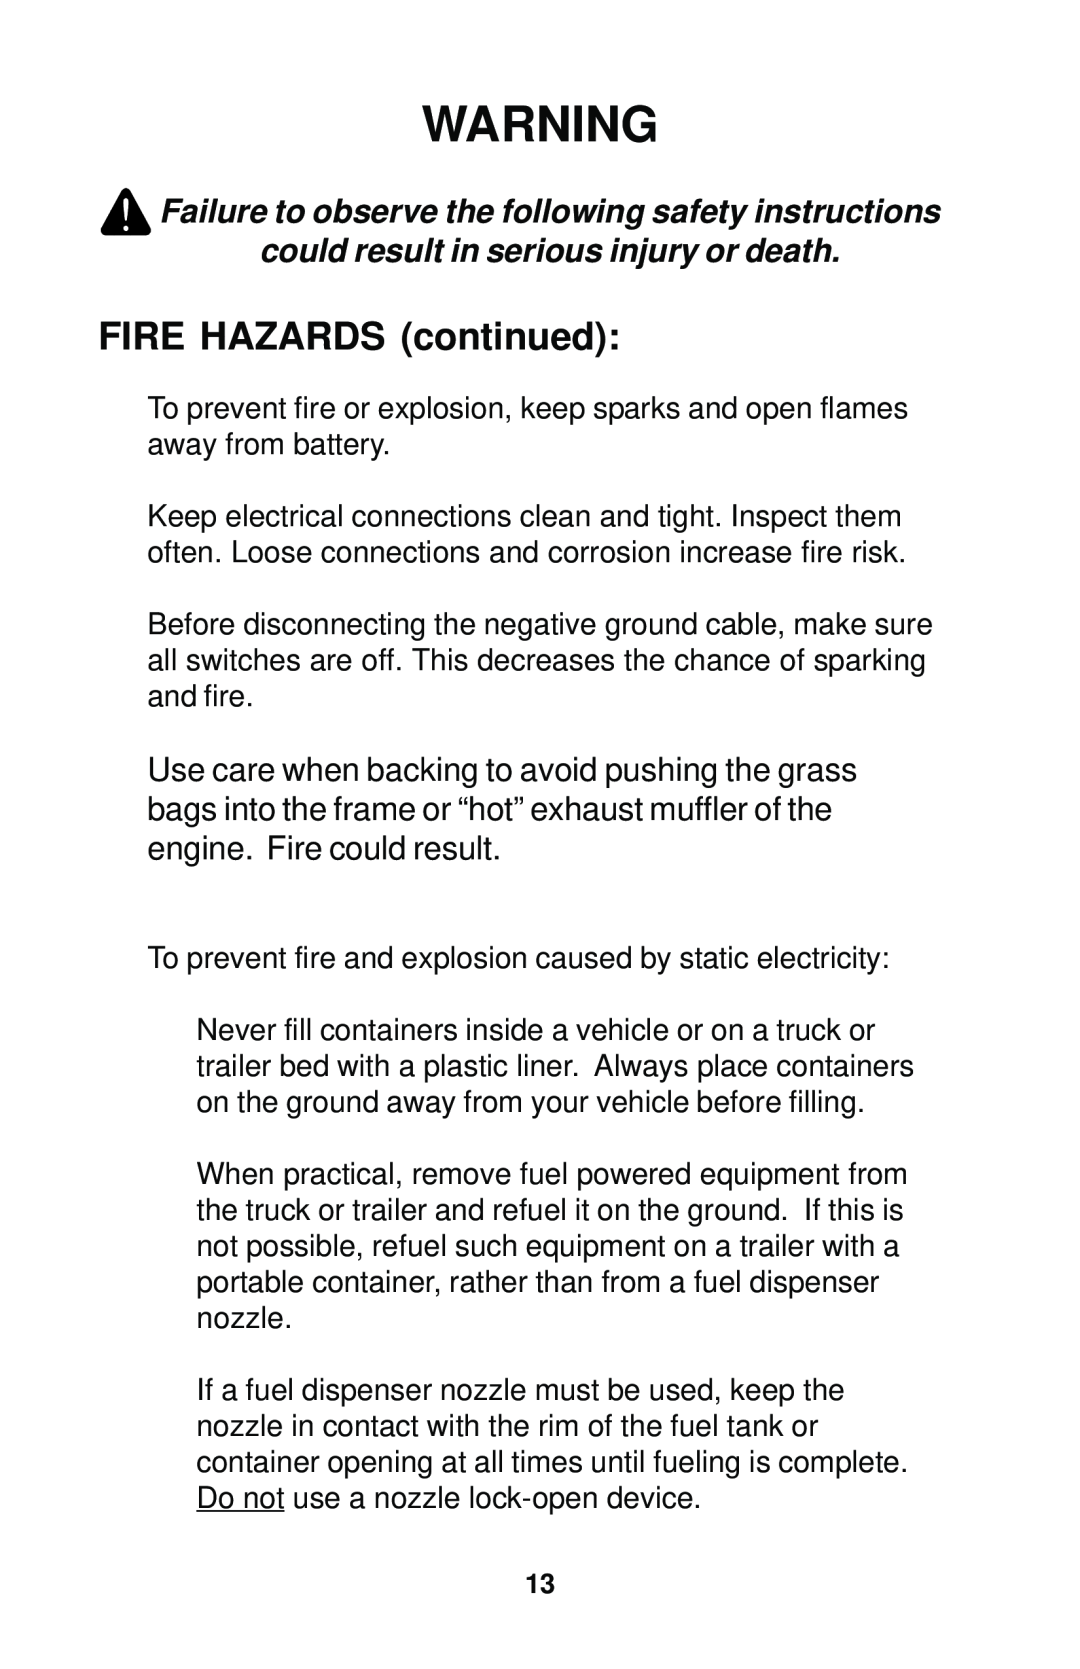 Dixon 17823-0704 manual FIRE HAZARDS continued 